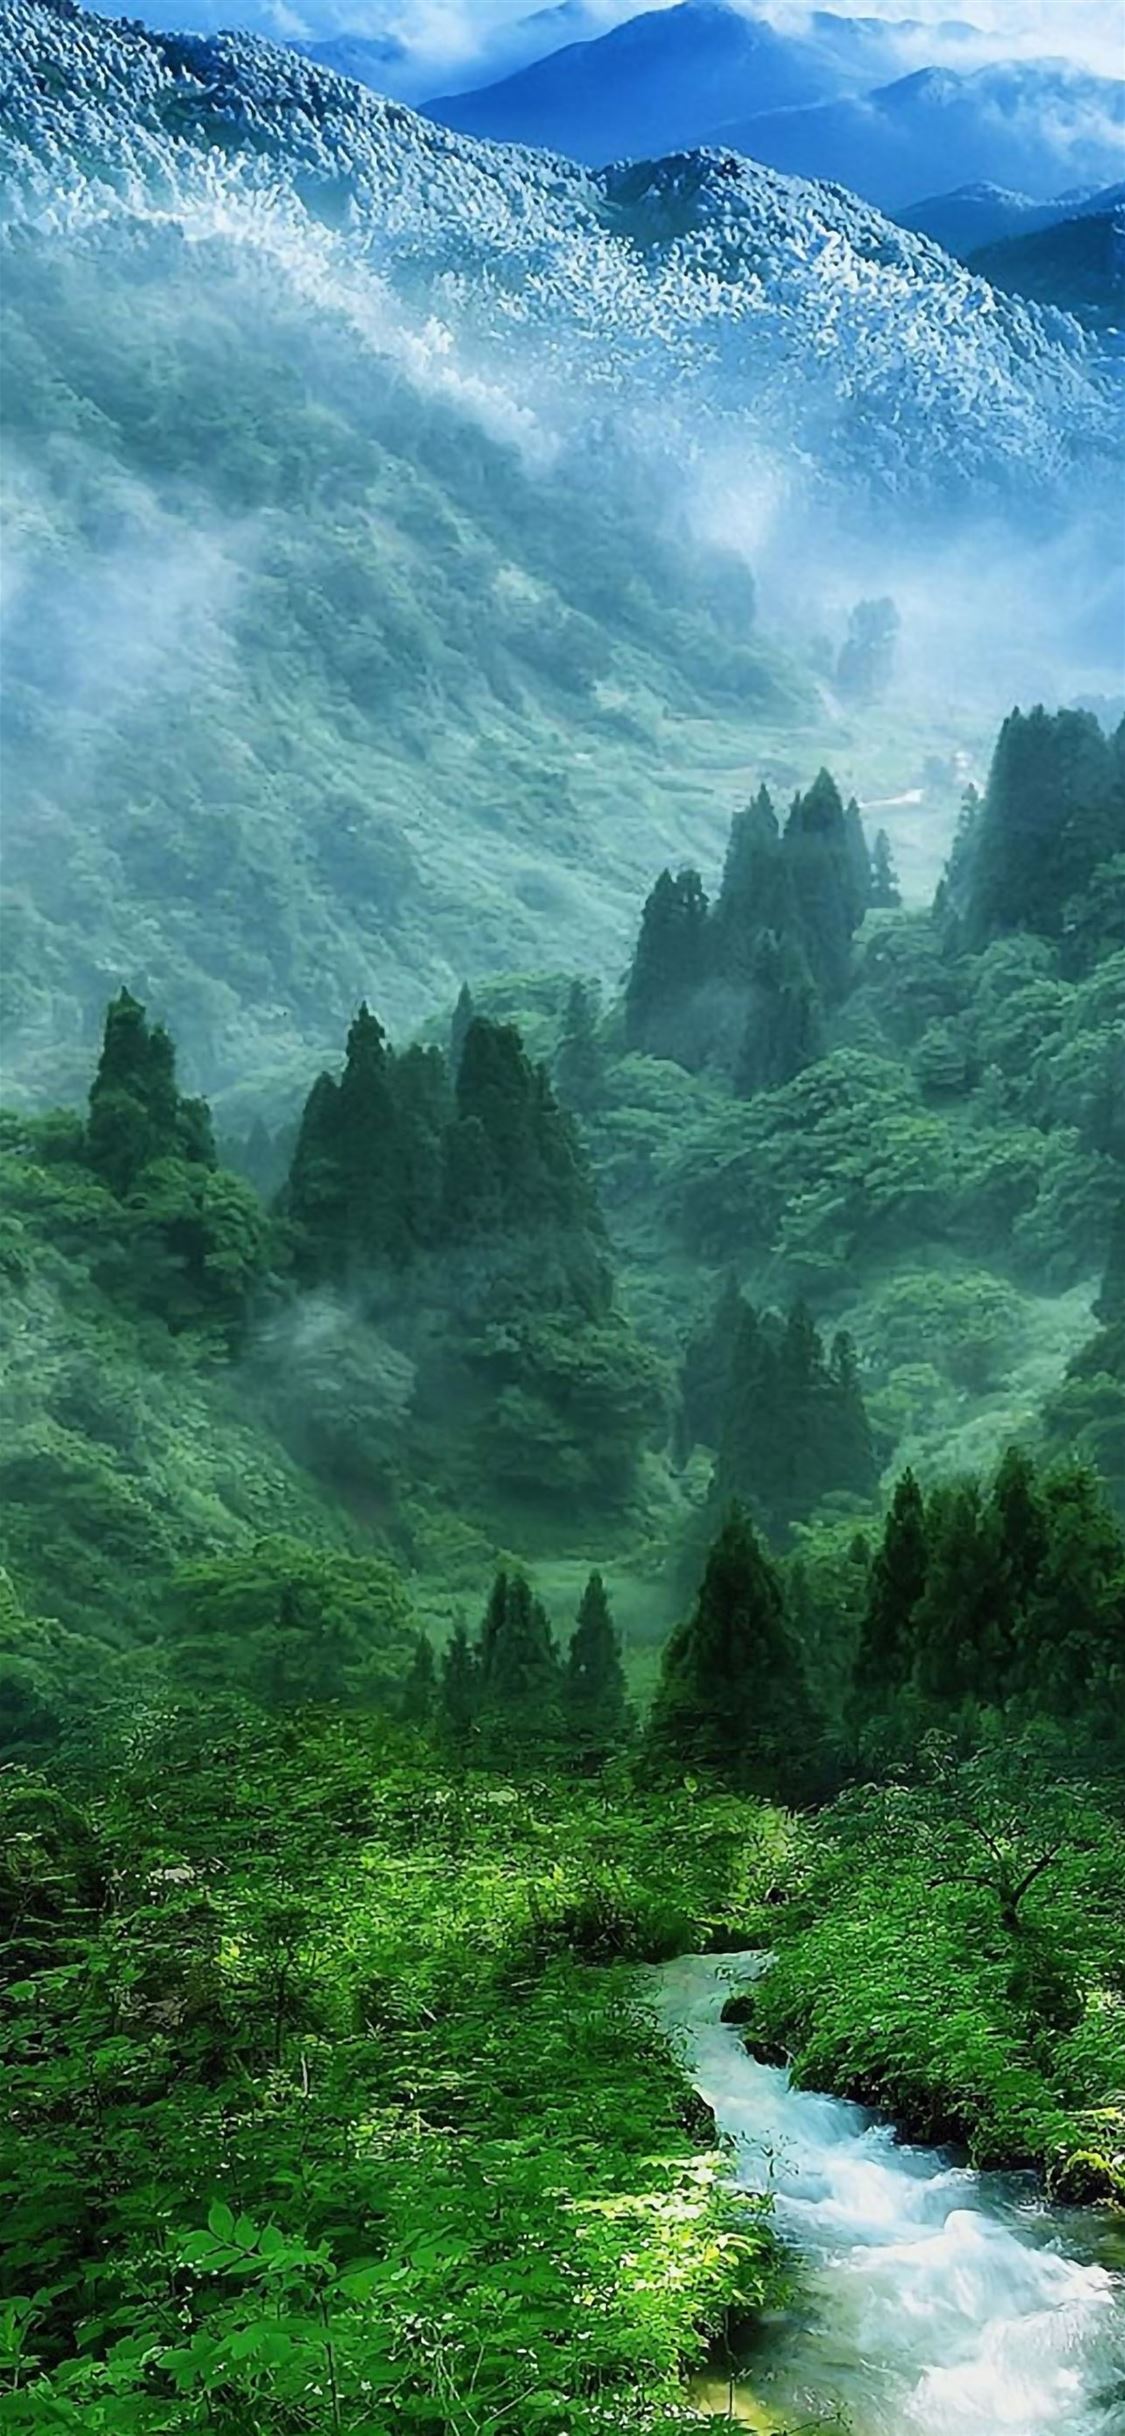 Nature Mist Mountain Wood Forest River Landscape iPhone wallpaper 